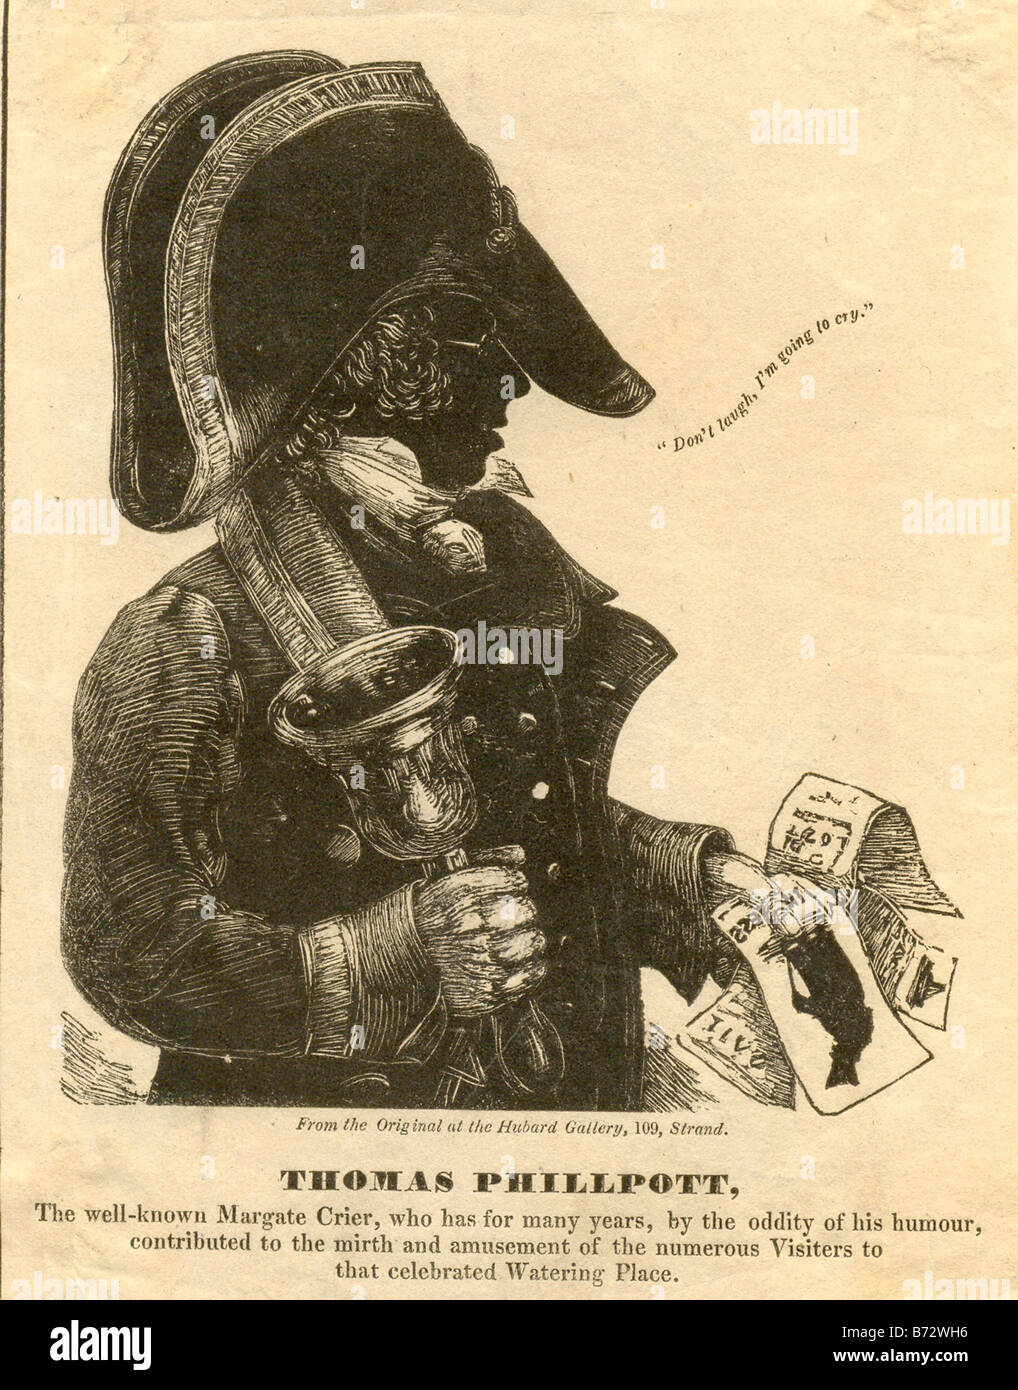 Silhouette-Porträt von Thomas Phillpott, Margate Ausrufer, ca. 1840 Stockfoto